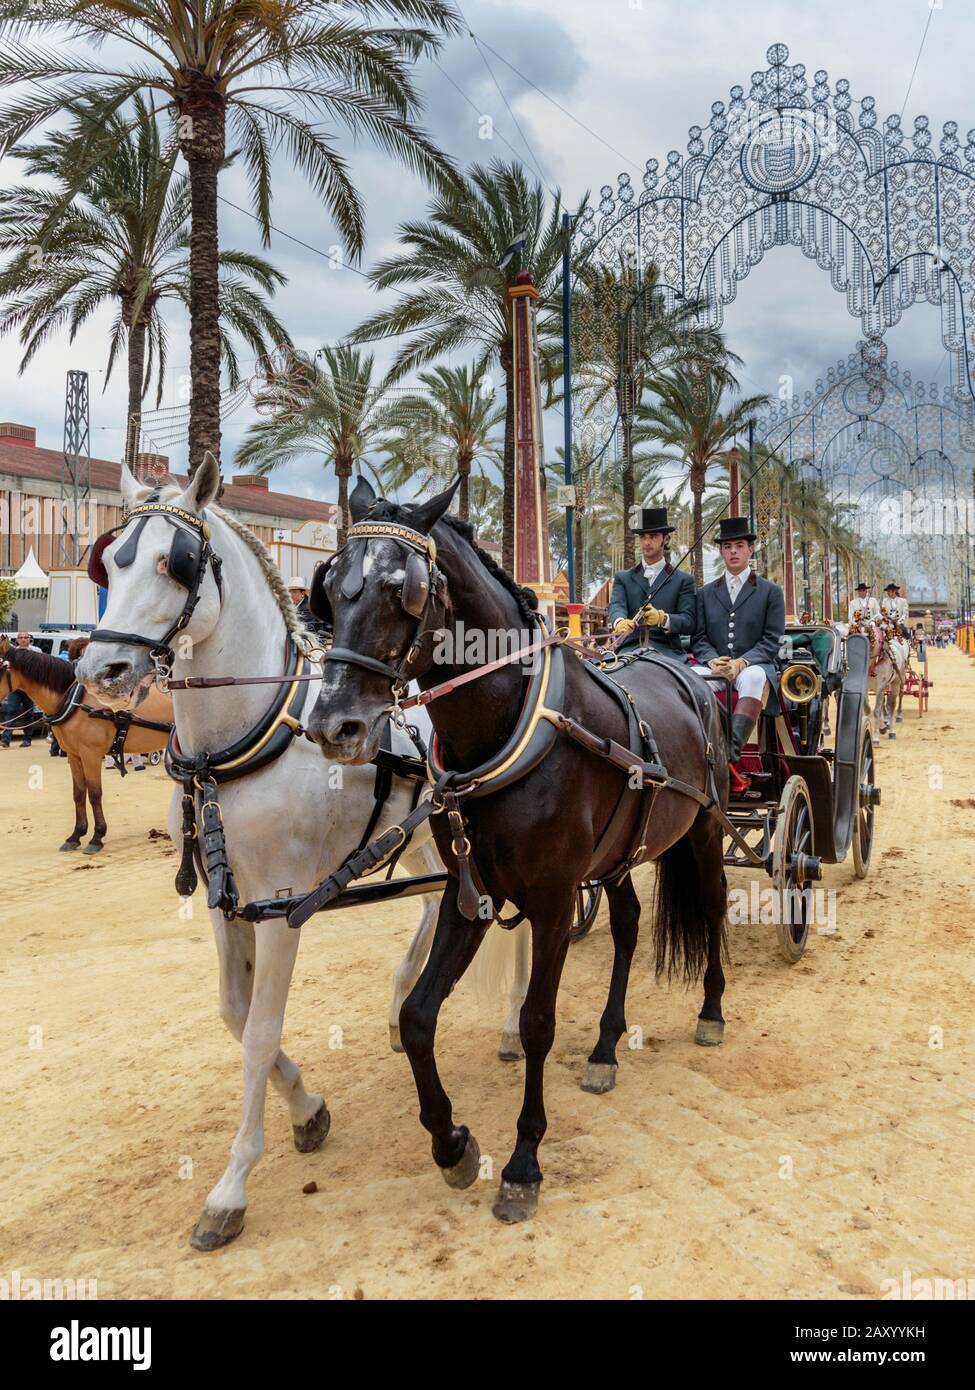 Carruajes de caballos decorados de forma tradicional, Feria del caballo de Jerez (Feria de caballo) , Jerez de la Frontera, provincia de Cádiz, Andalucía, España Foto de stock